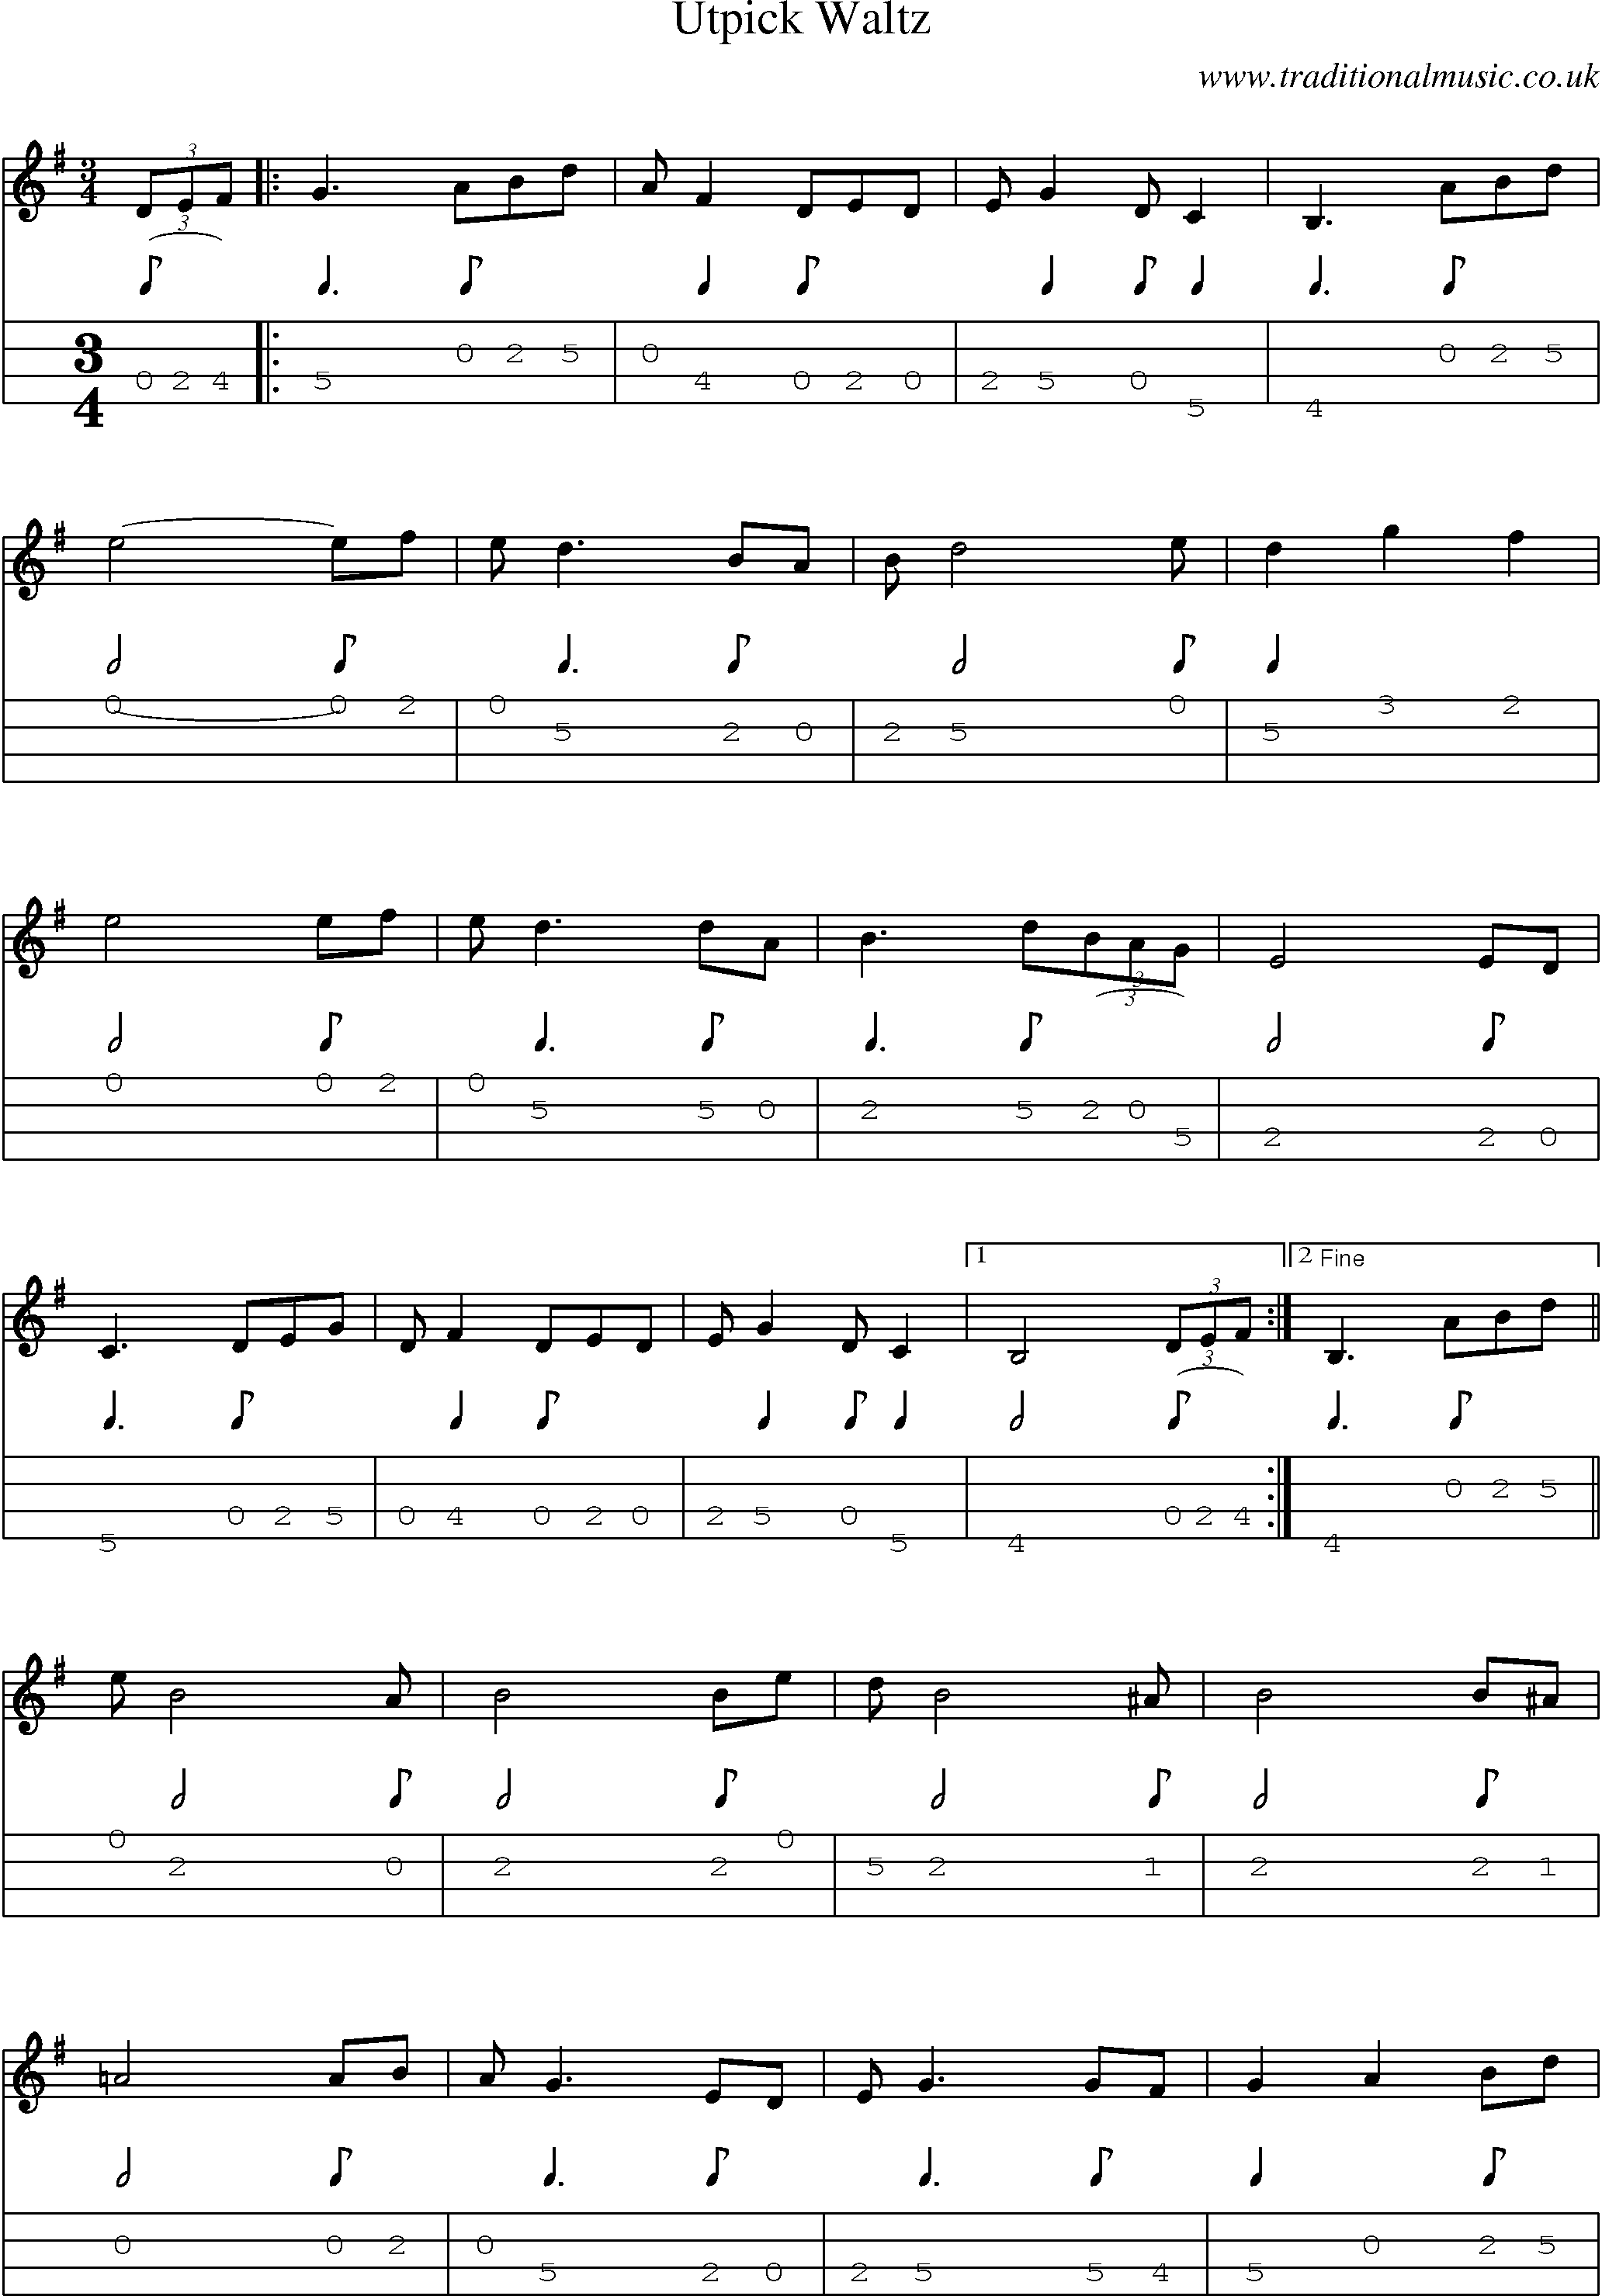 Music Score and Mandolin Tabs for Utpick Waltz